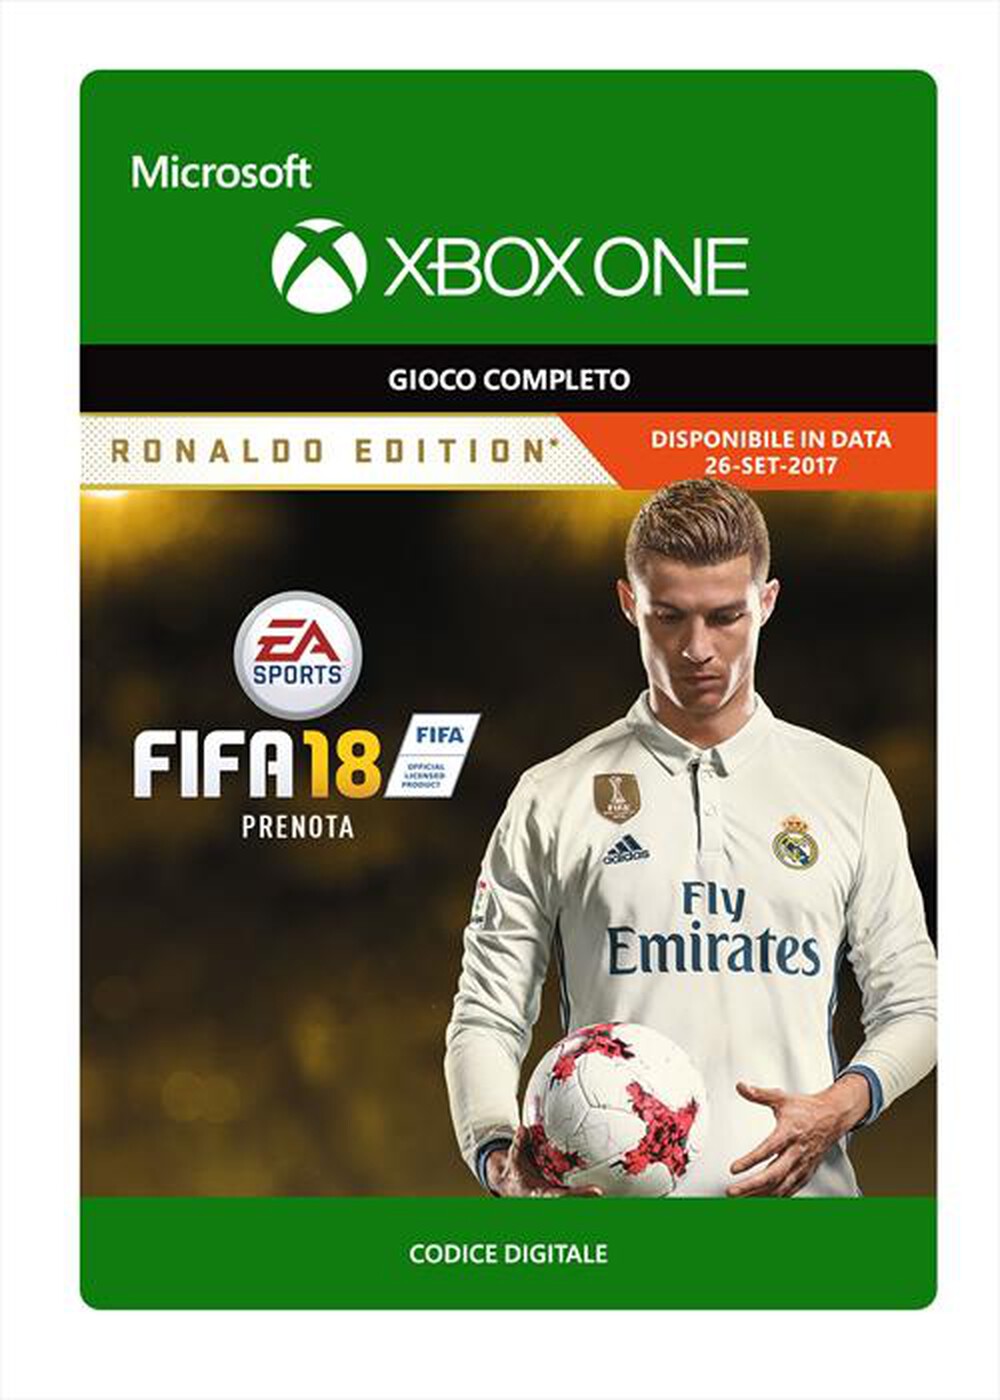 "MICROSOFT - FIFA 18 Ronaldo Edition - "